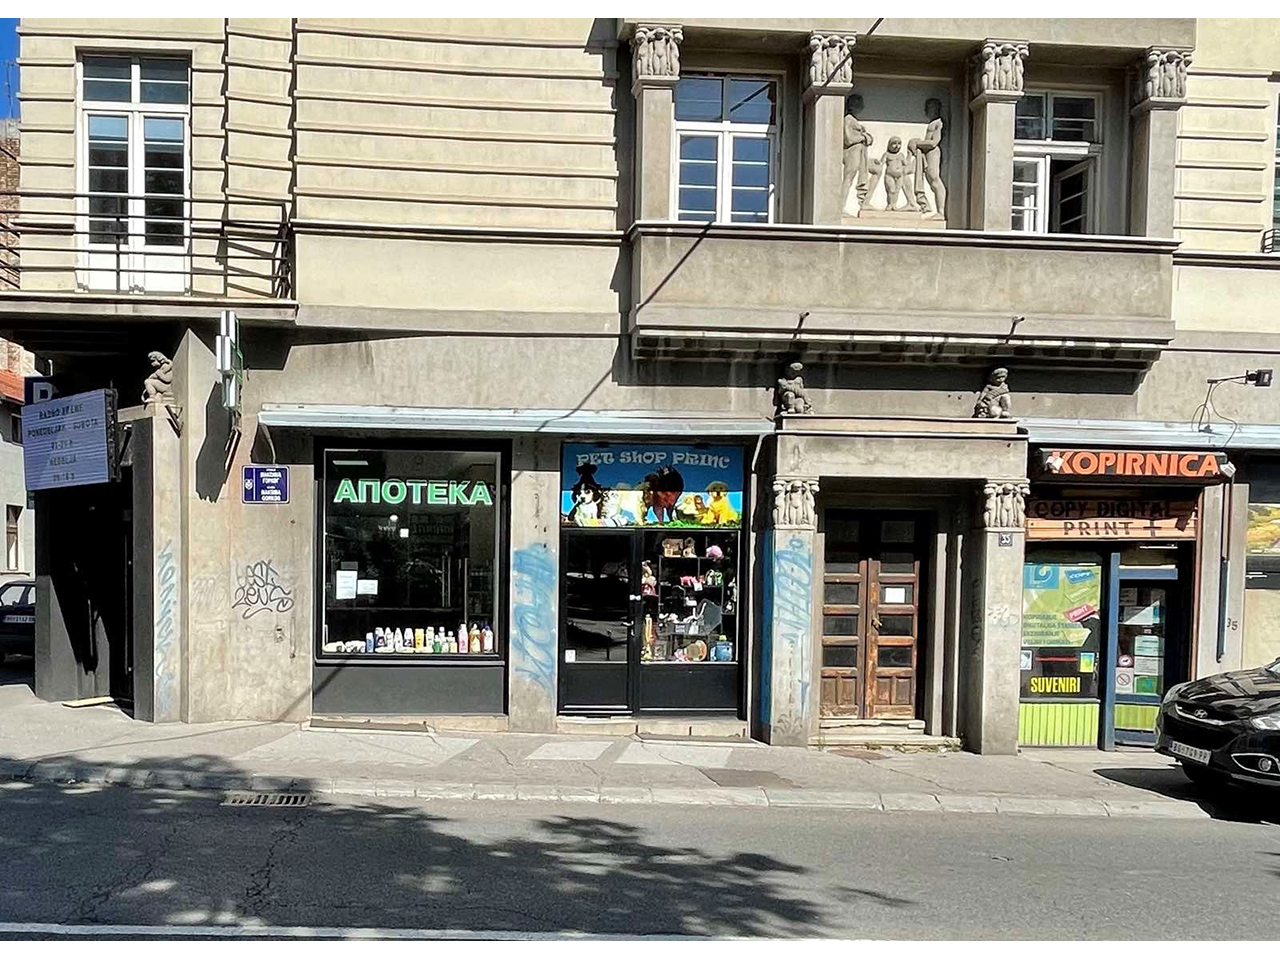 PET SHOP PRINC Kućni ljubimci, pet shop Beograd